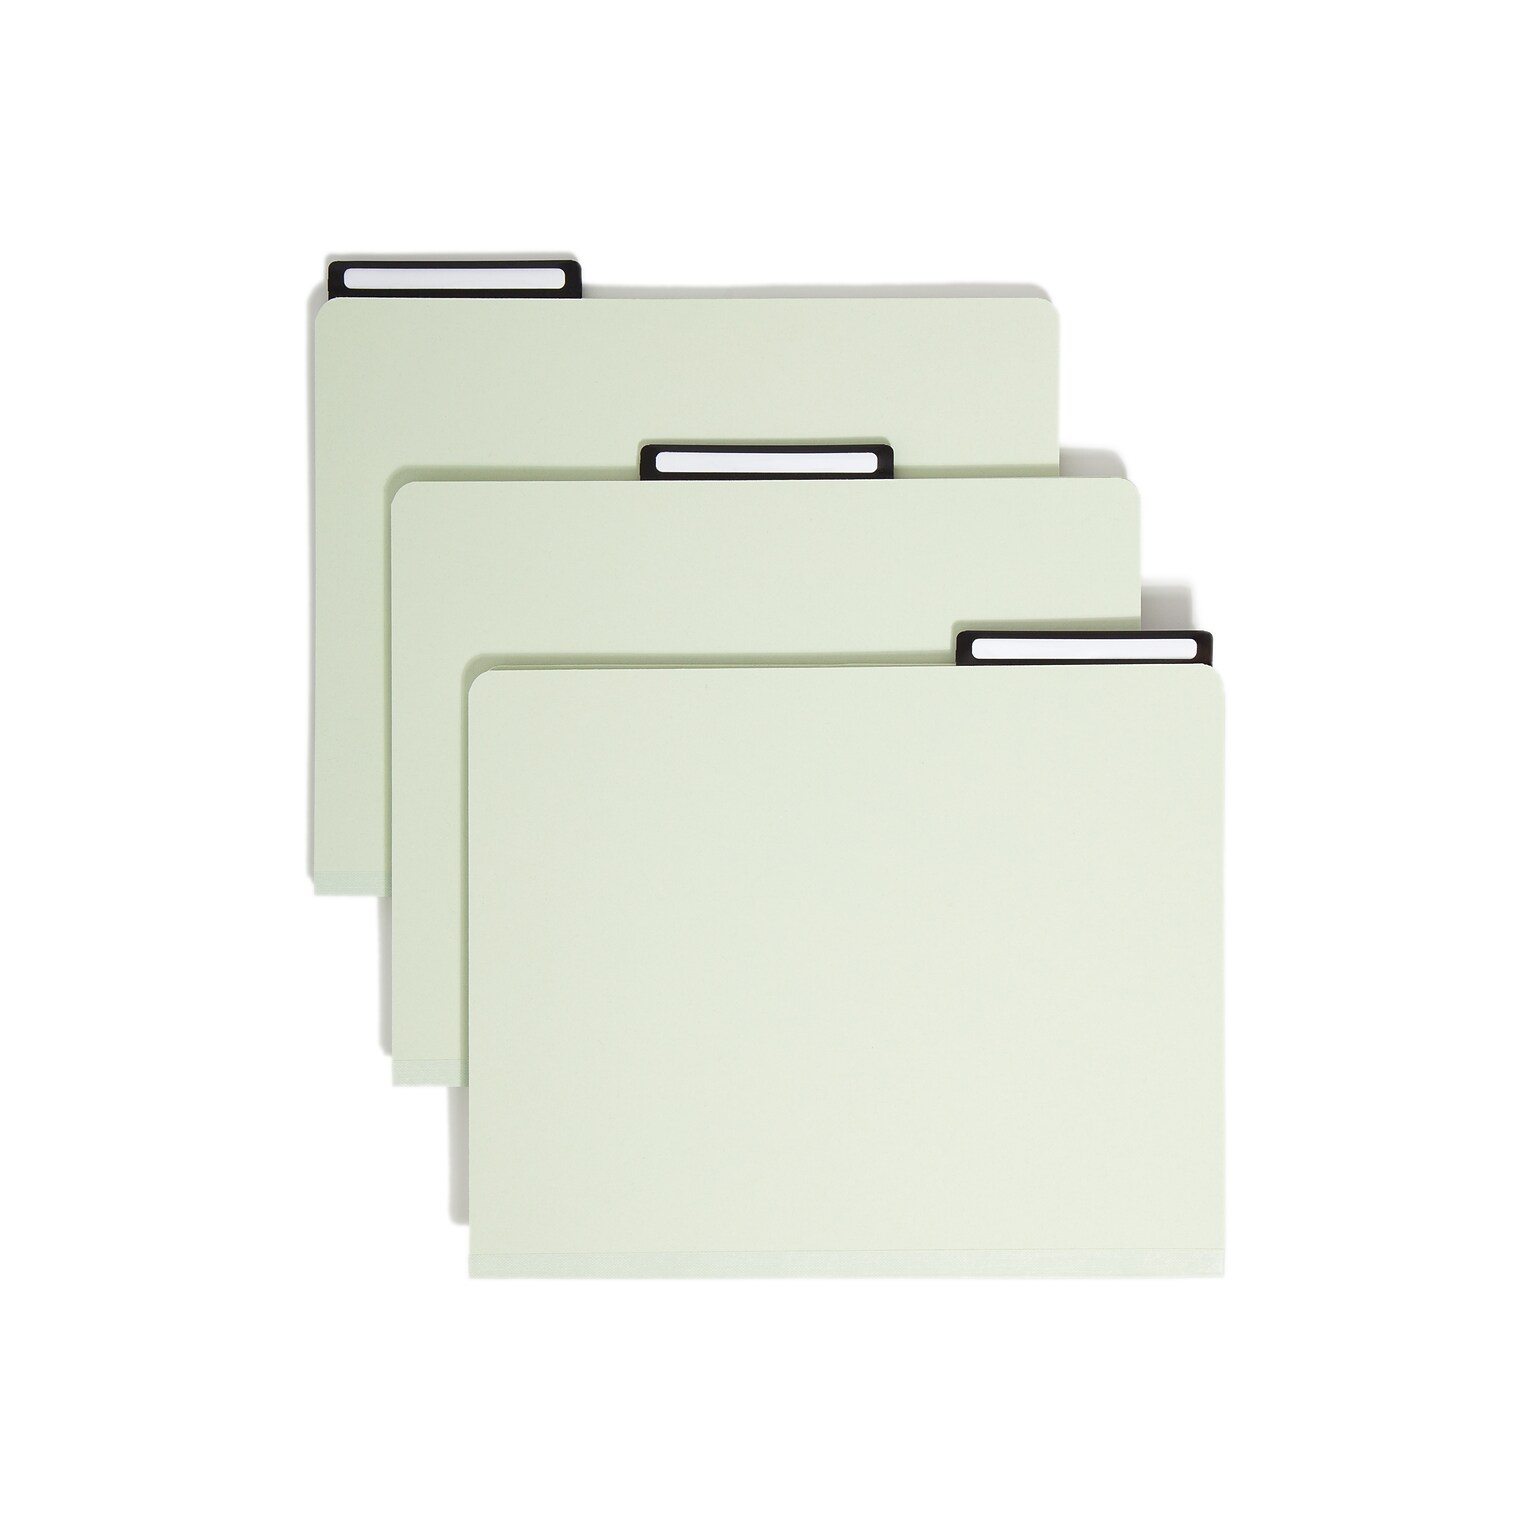 Smead Pressboard File Folder, 1/3-Cut Tab Flat Metal, 1 Expansion, Letter Size, Gray/Green, 25 per Box (13430)